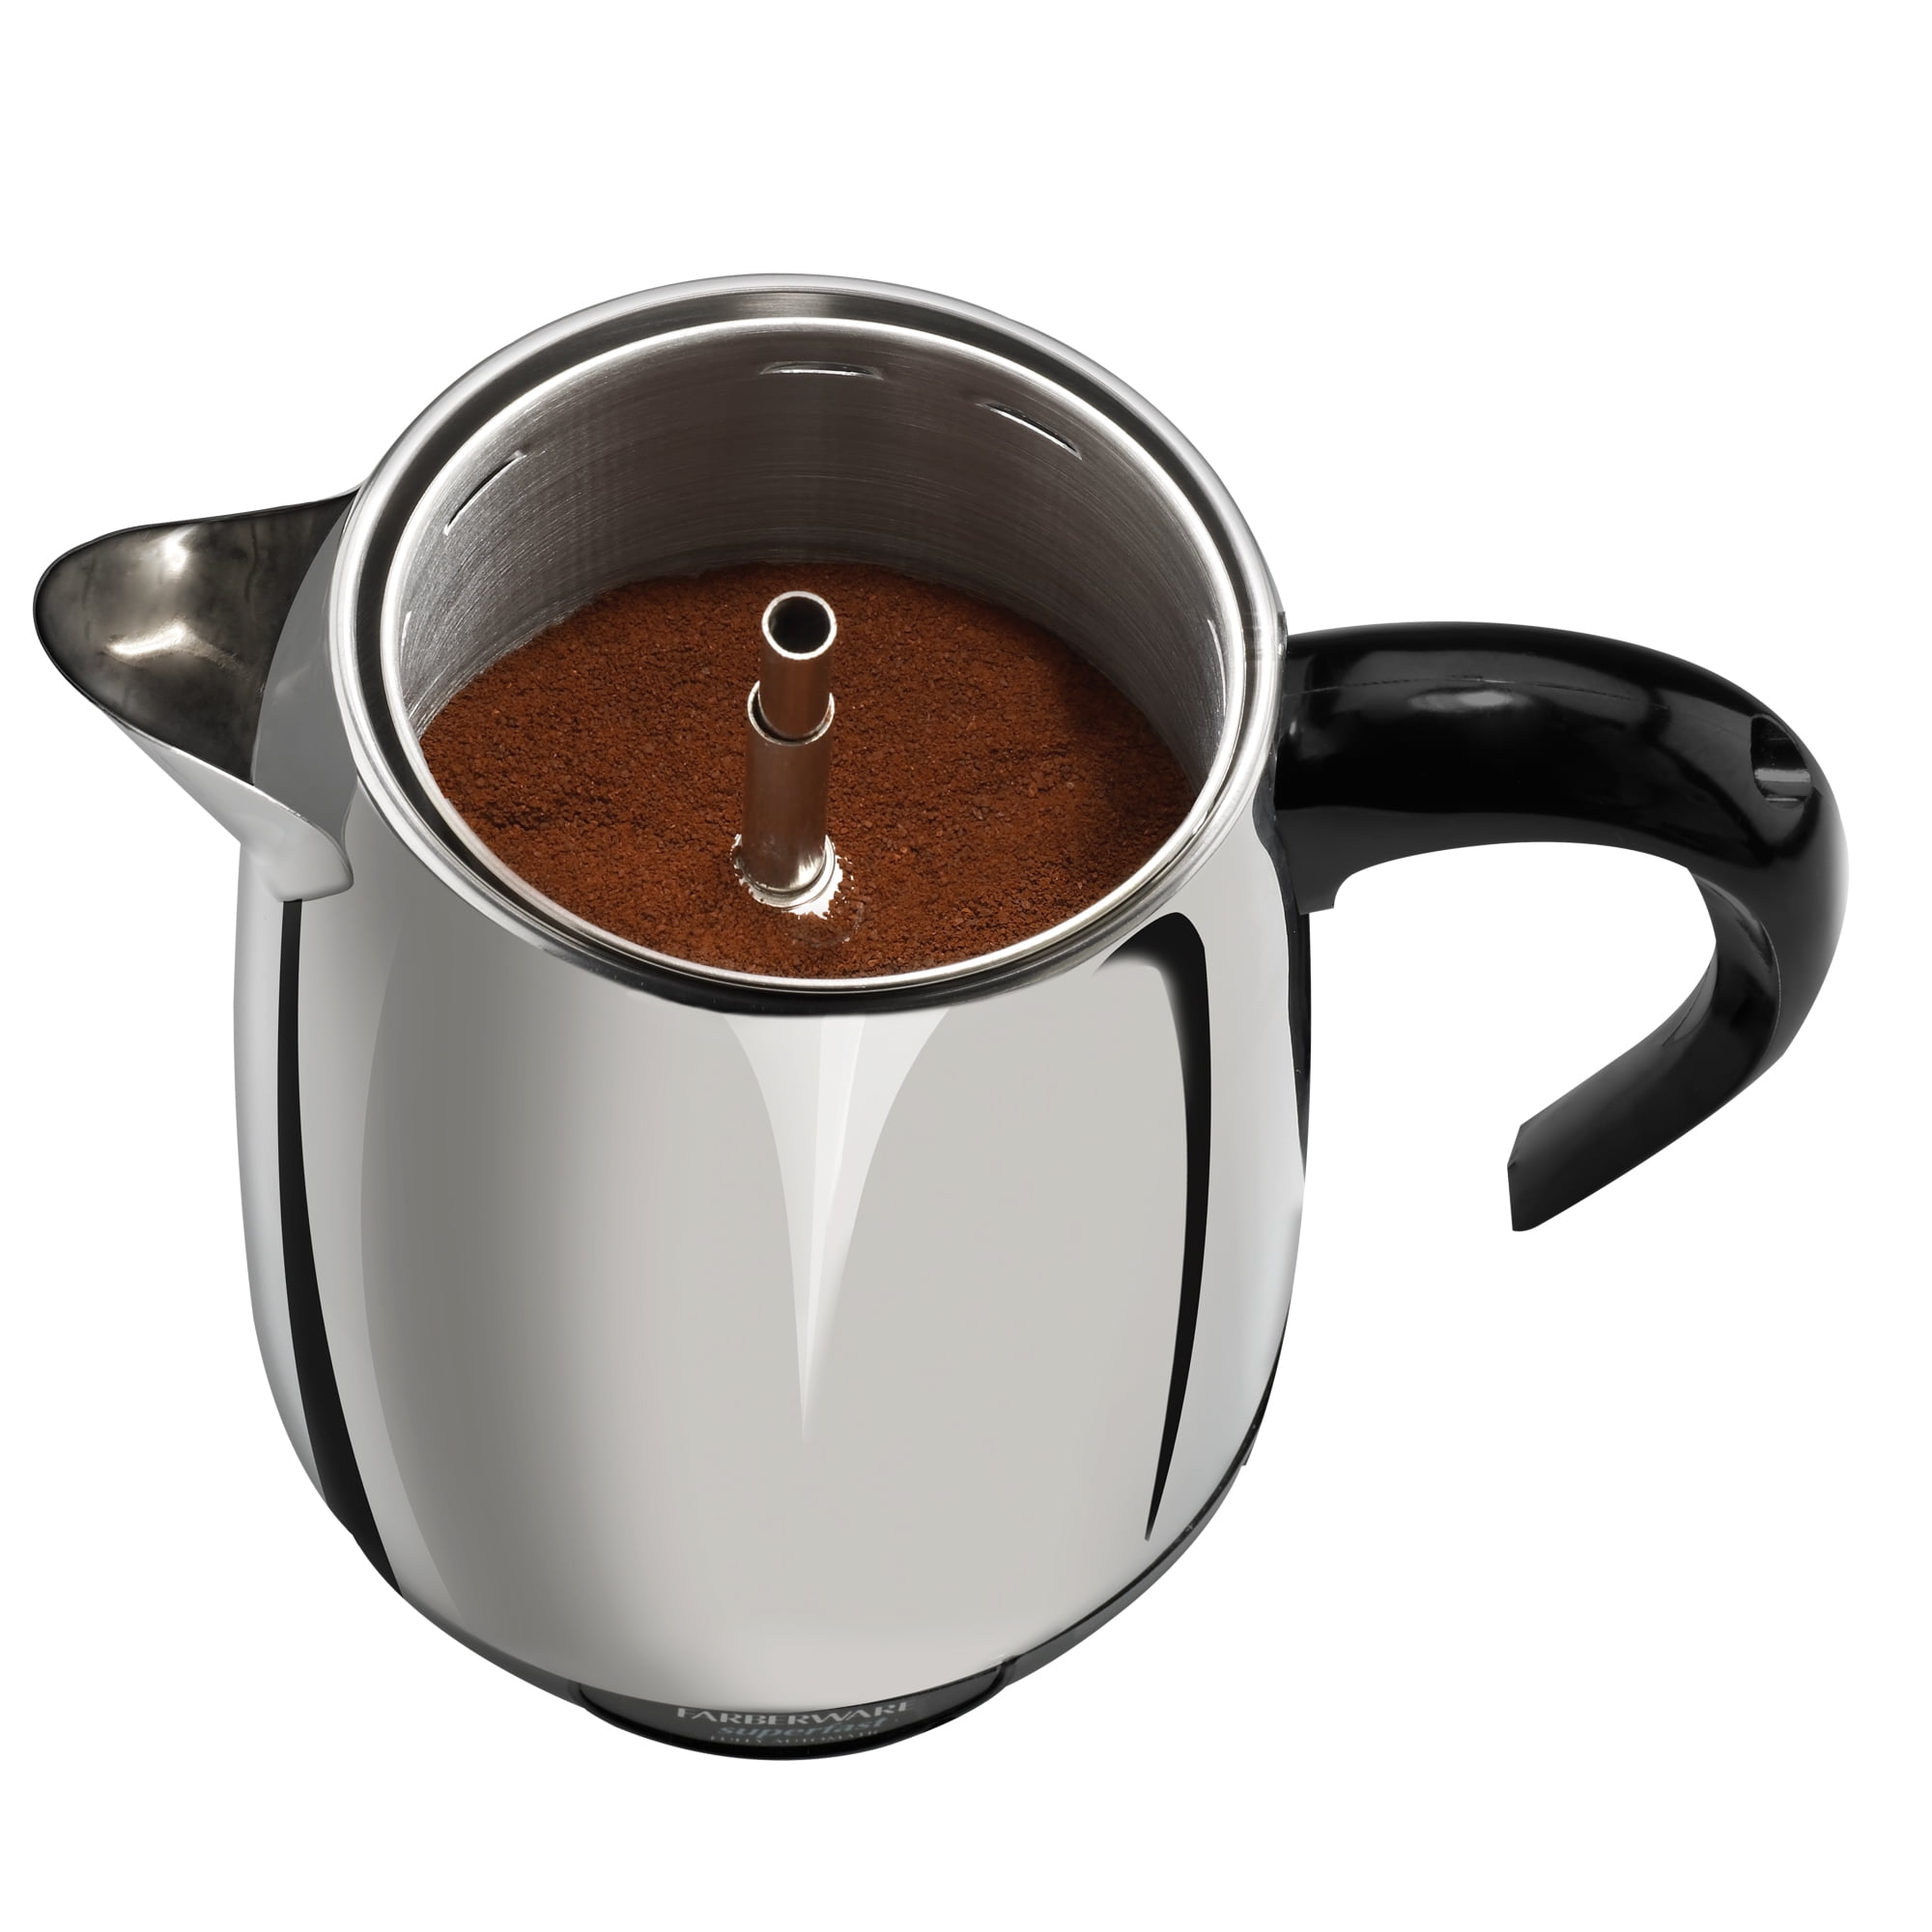 Farberware Percolator Coffee Pot for Sale in Saint James, NY - OfferUp